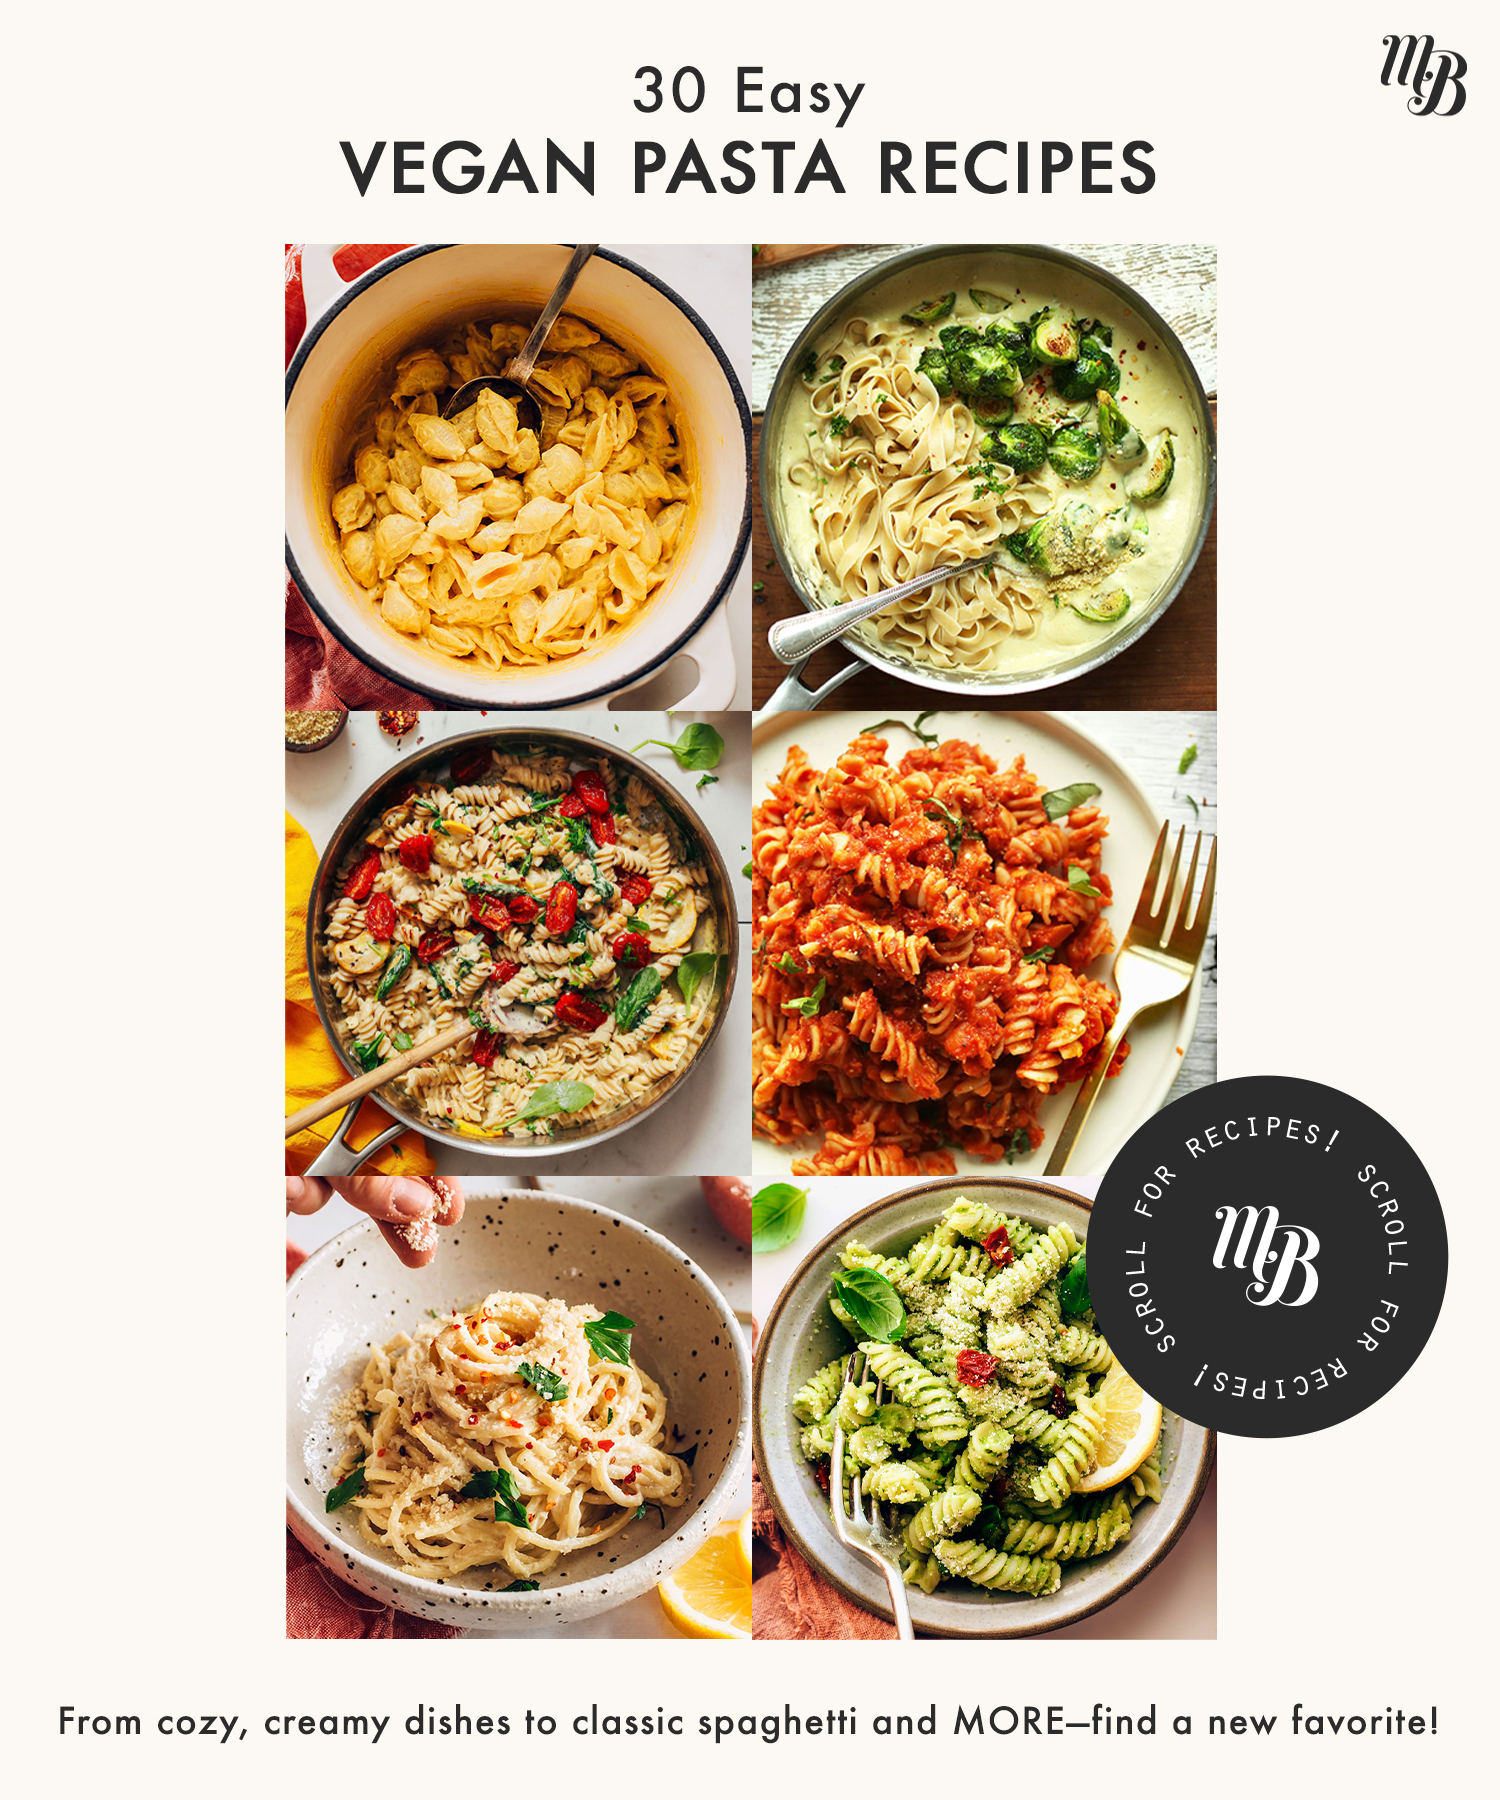 Assortment of vegan pasta recipes